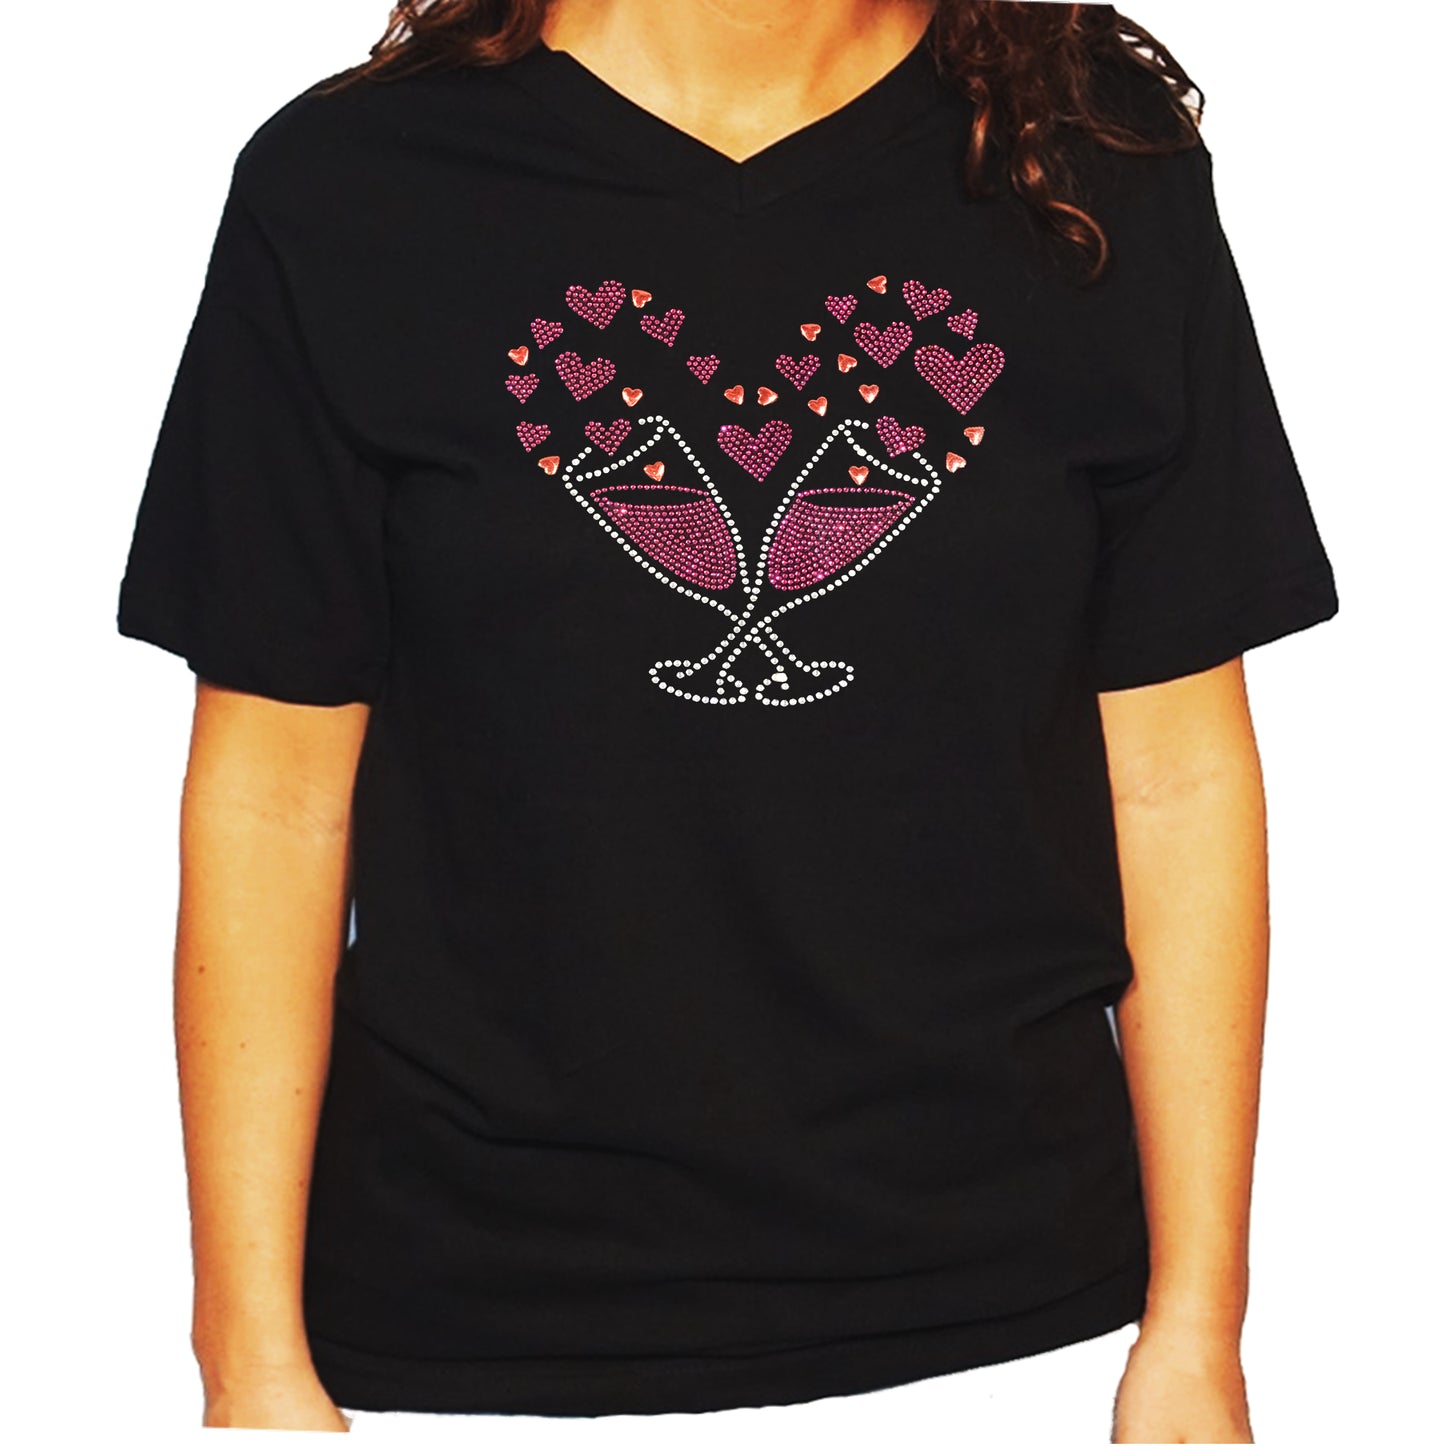 Women's / Unisex T-Shirt with Wine Glasses Heart in Rhinestones